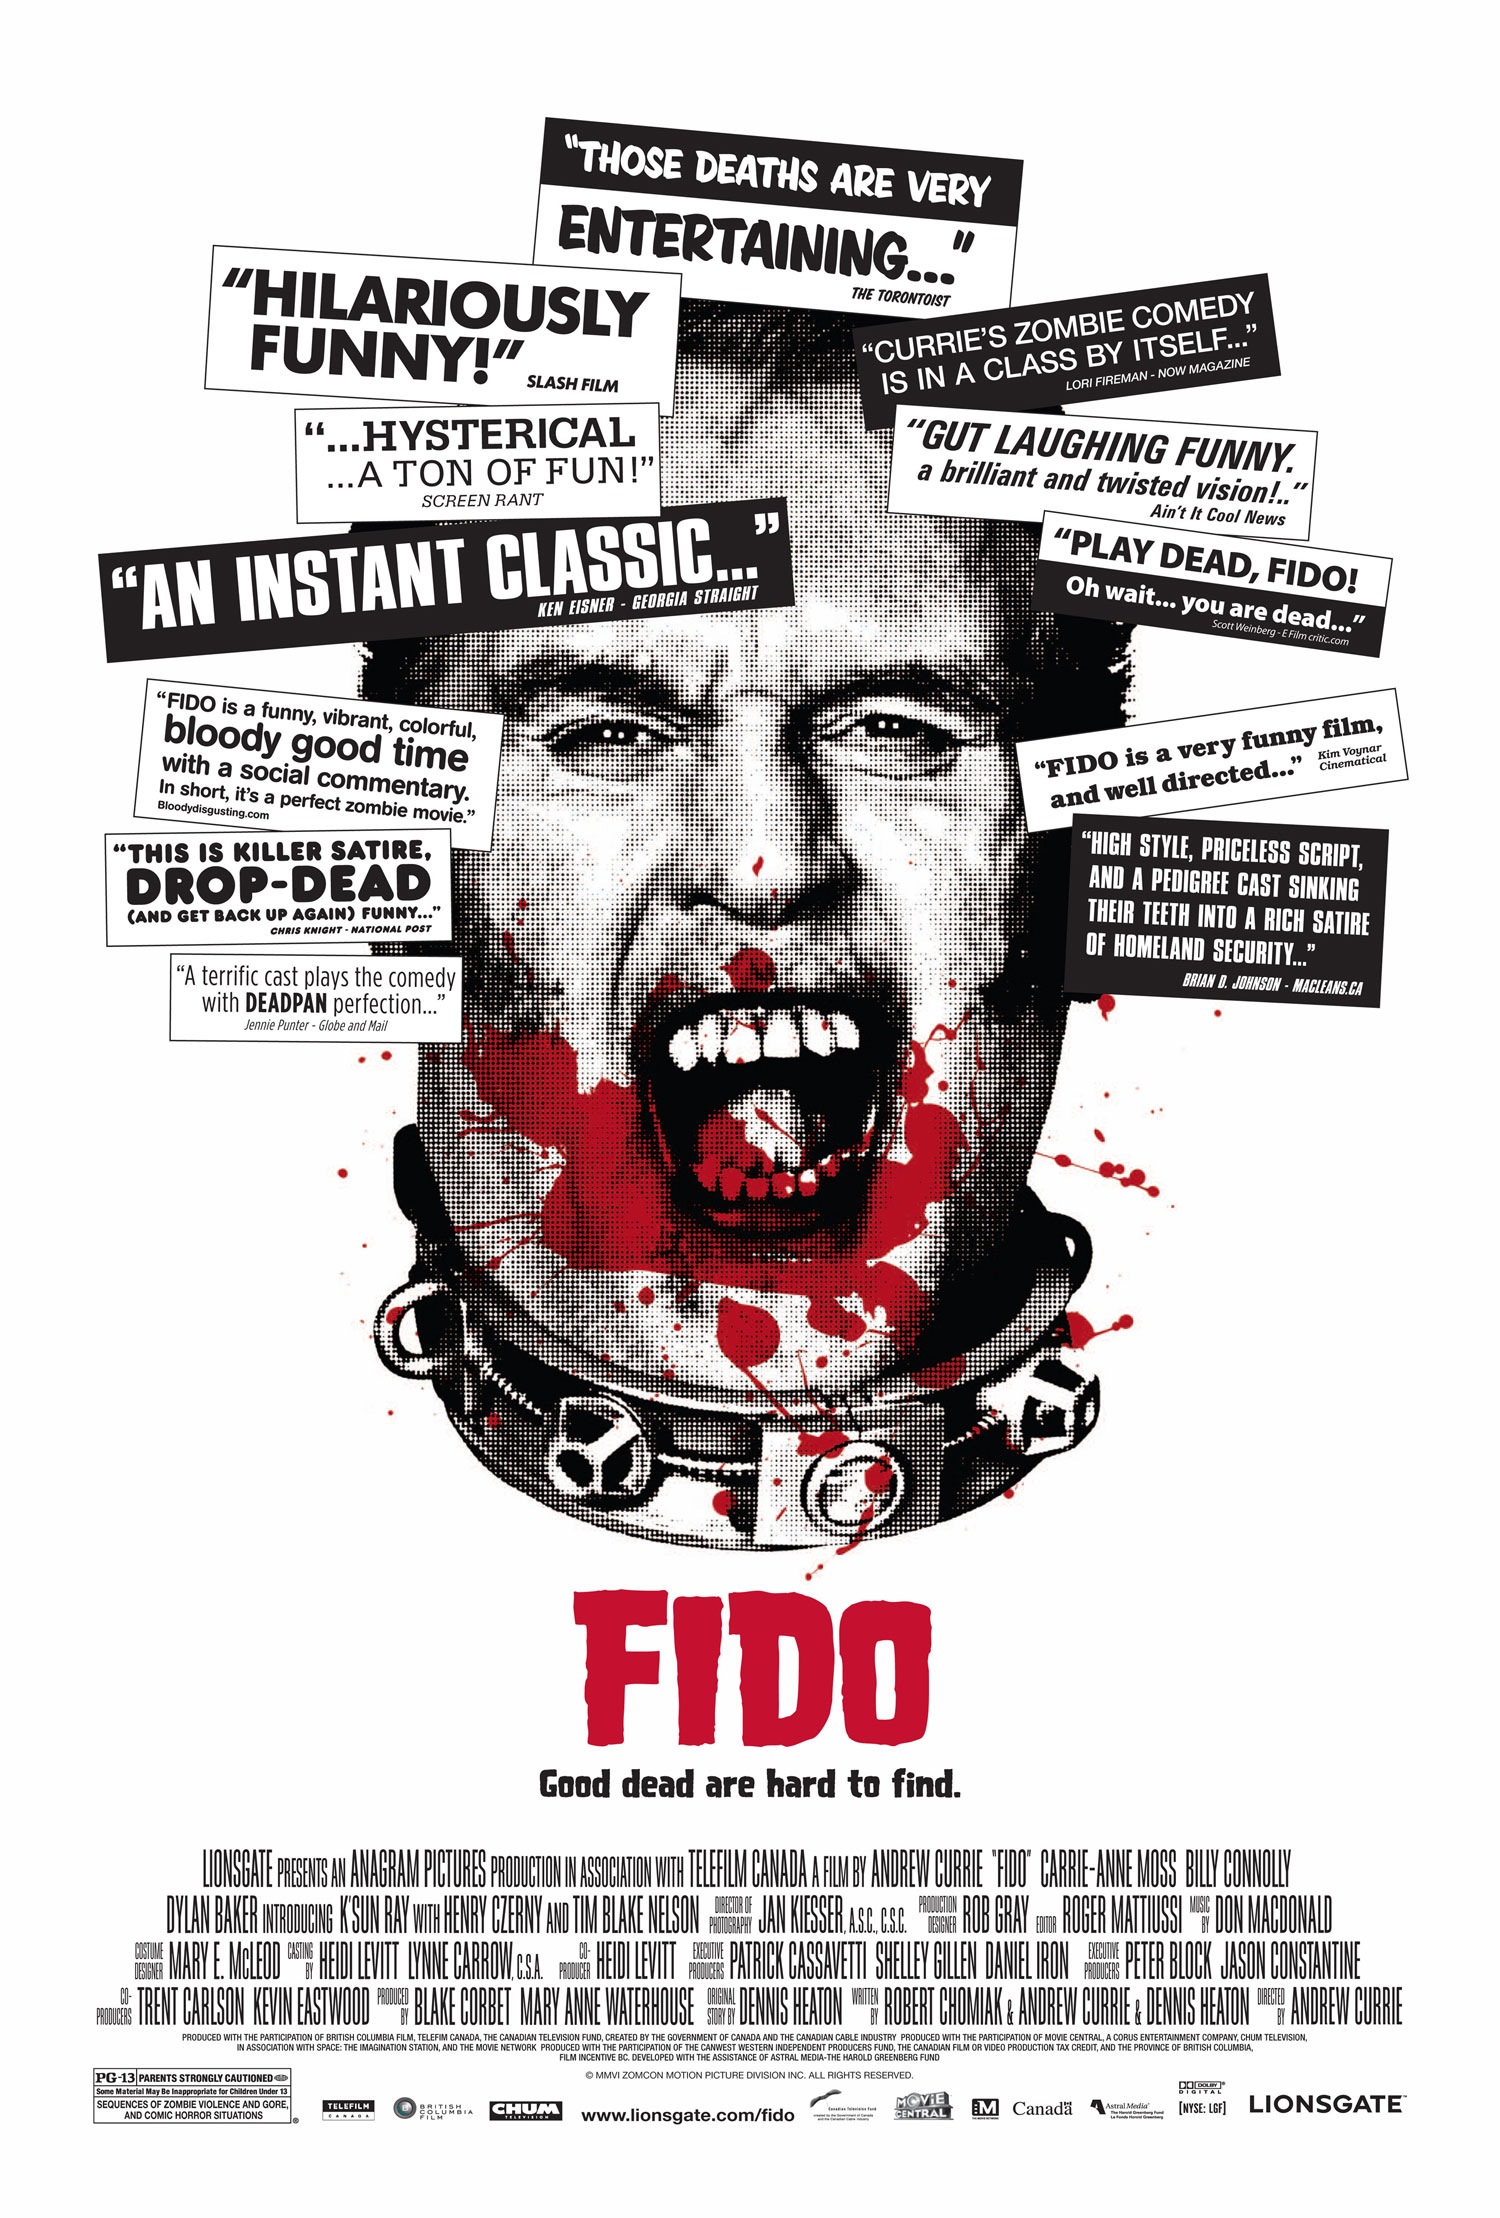 Fido (2007) Main Poster